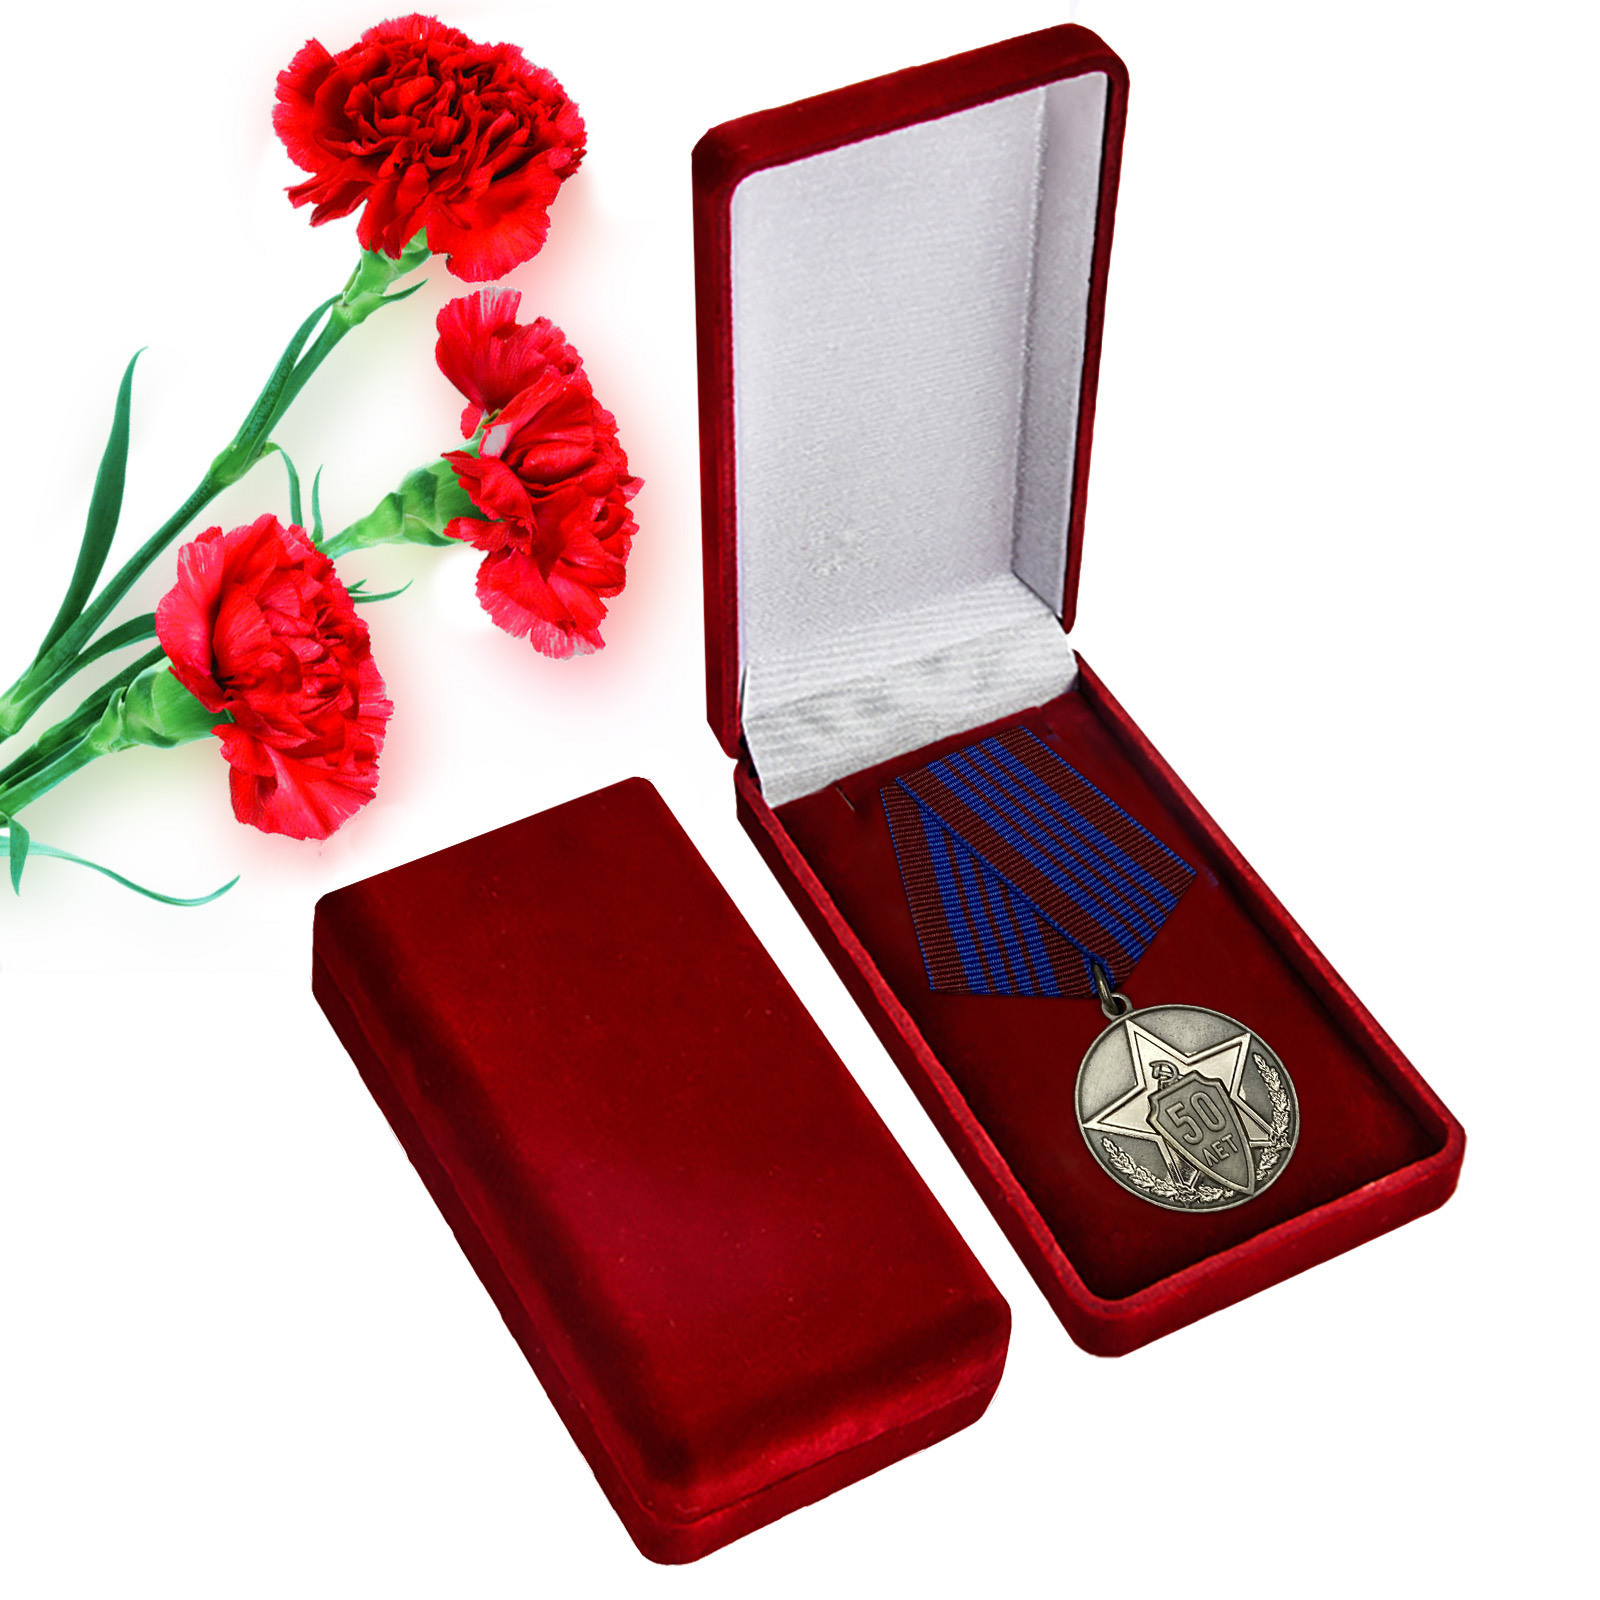 Реплика медали "50 лет милиции" в футляре